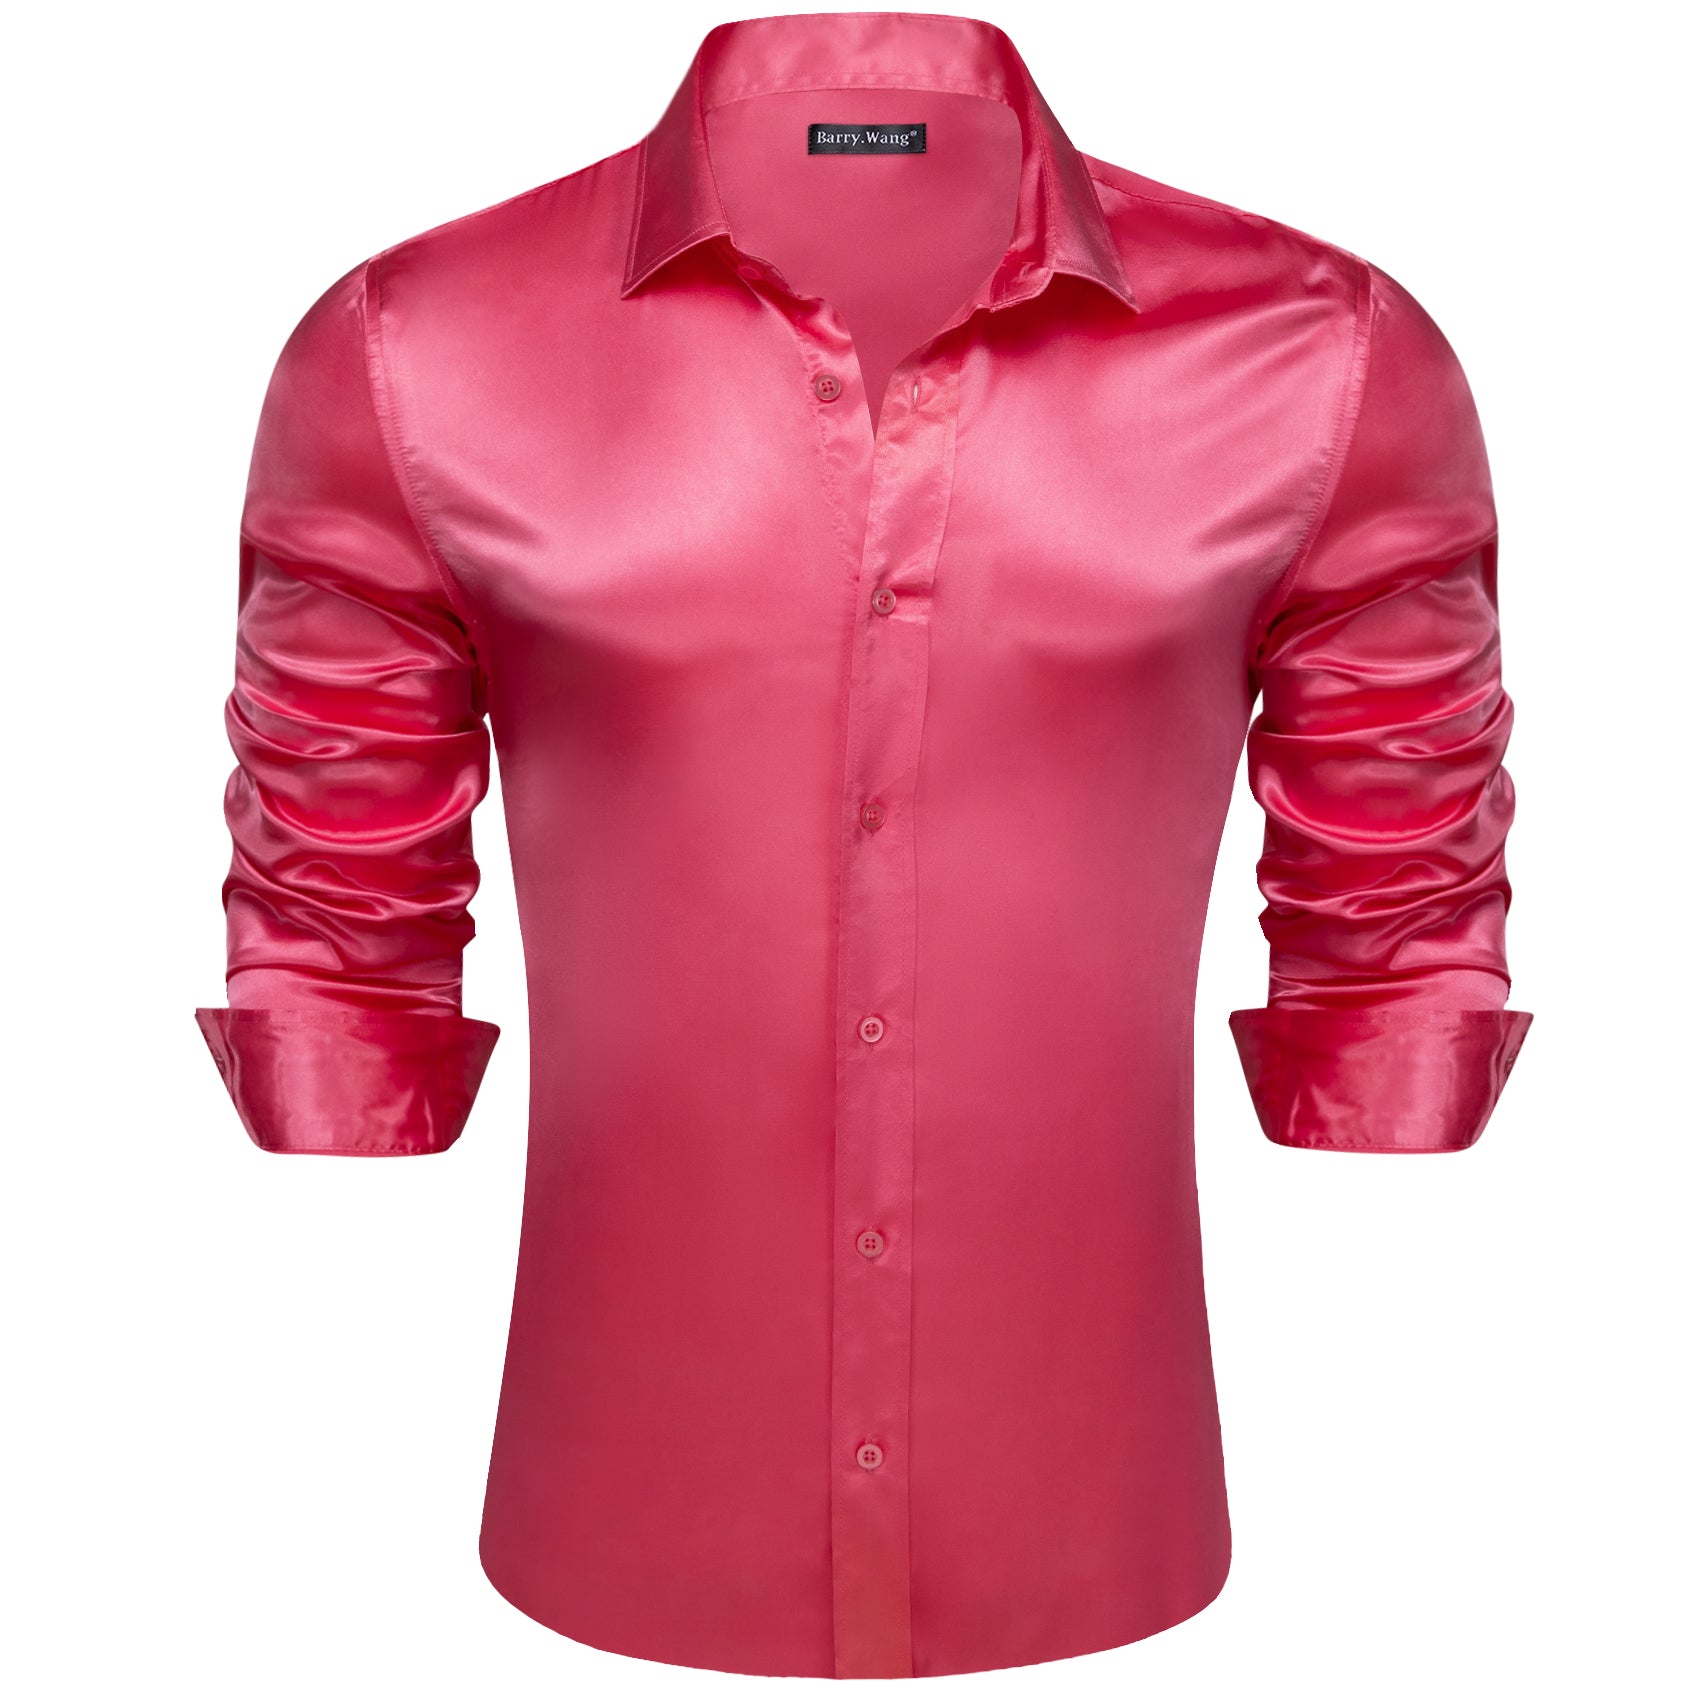 Barry.wang Shock Pink Solid Silk Shirt